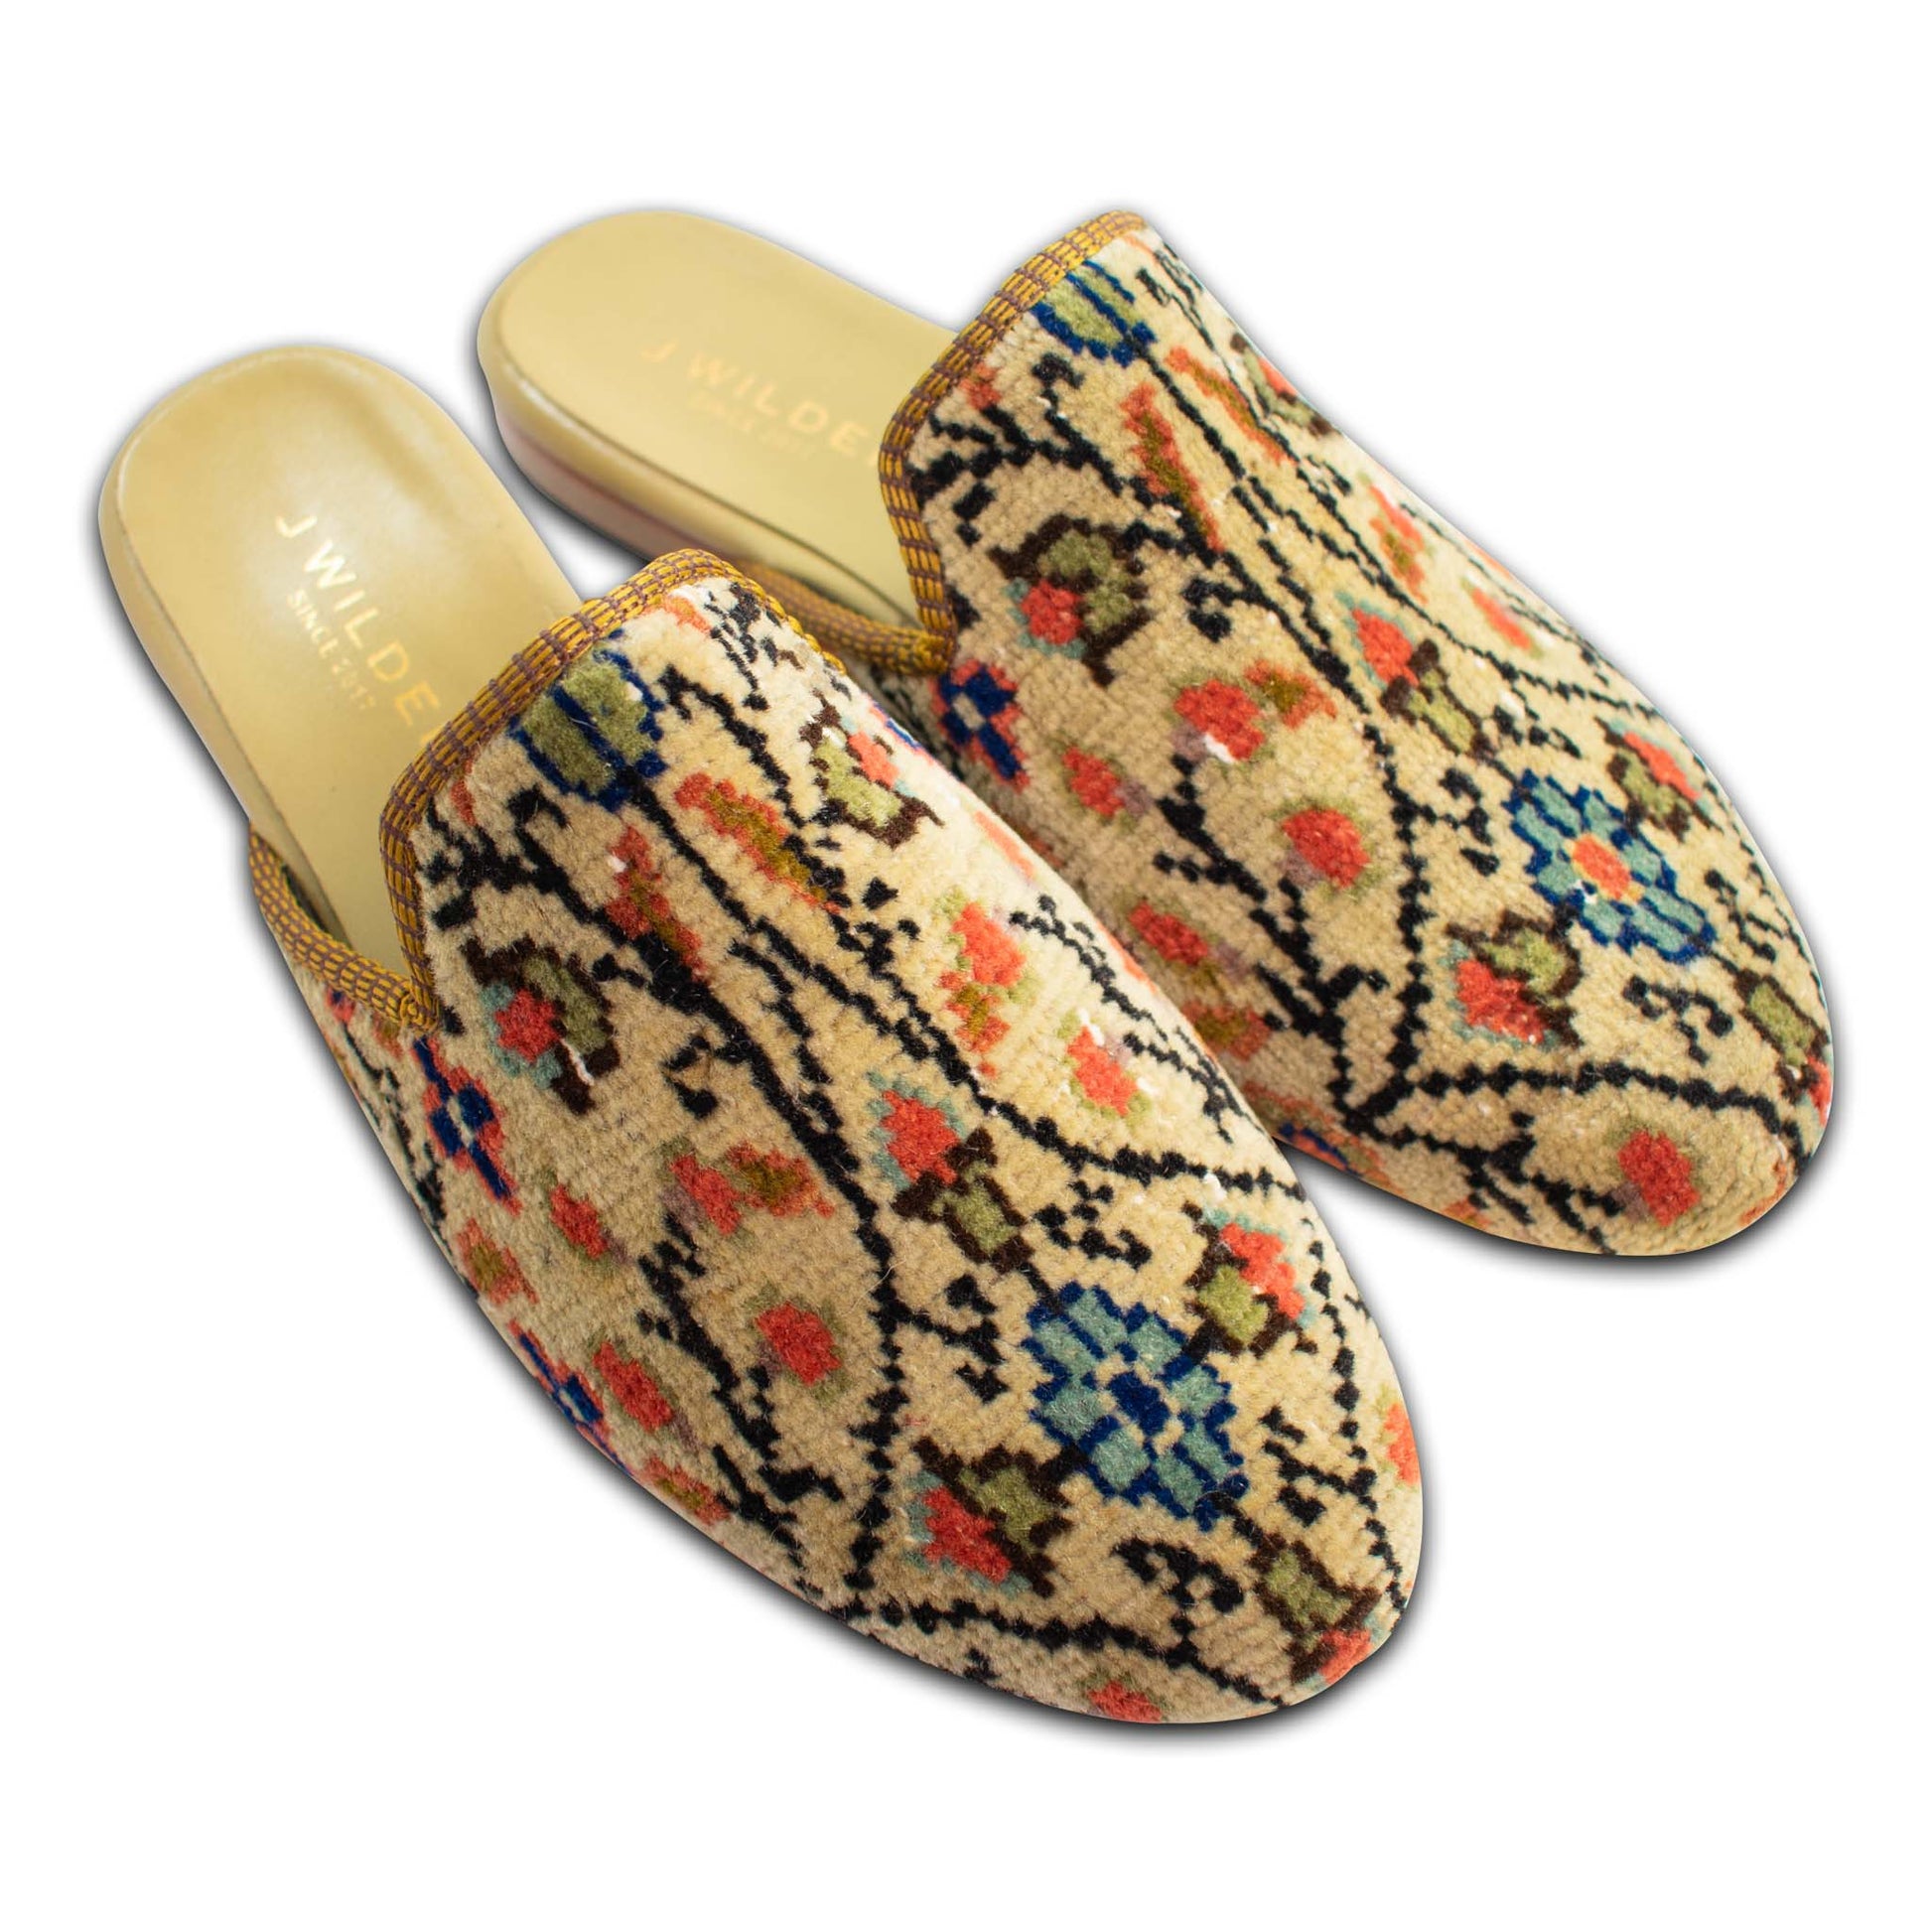 The Turkish slipper shoe in wool carpet